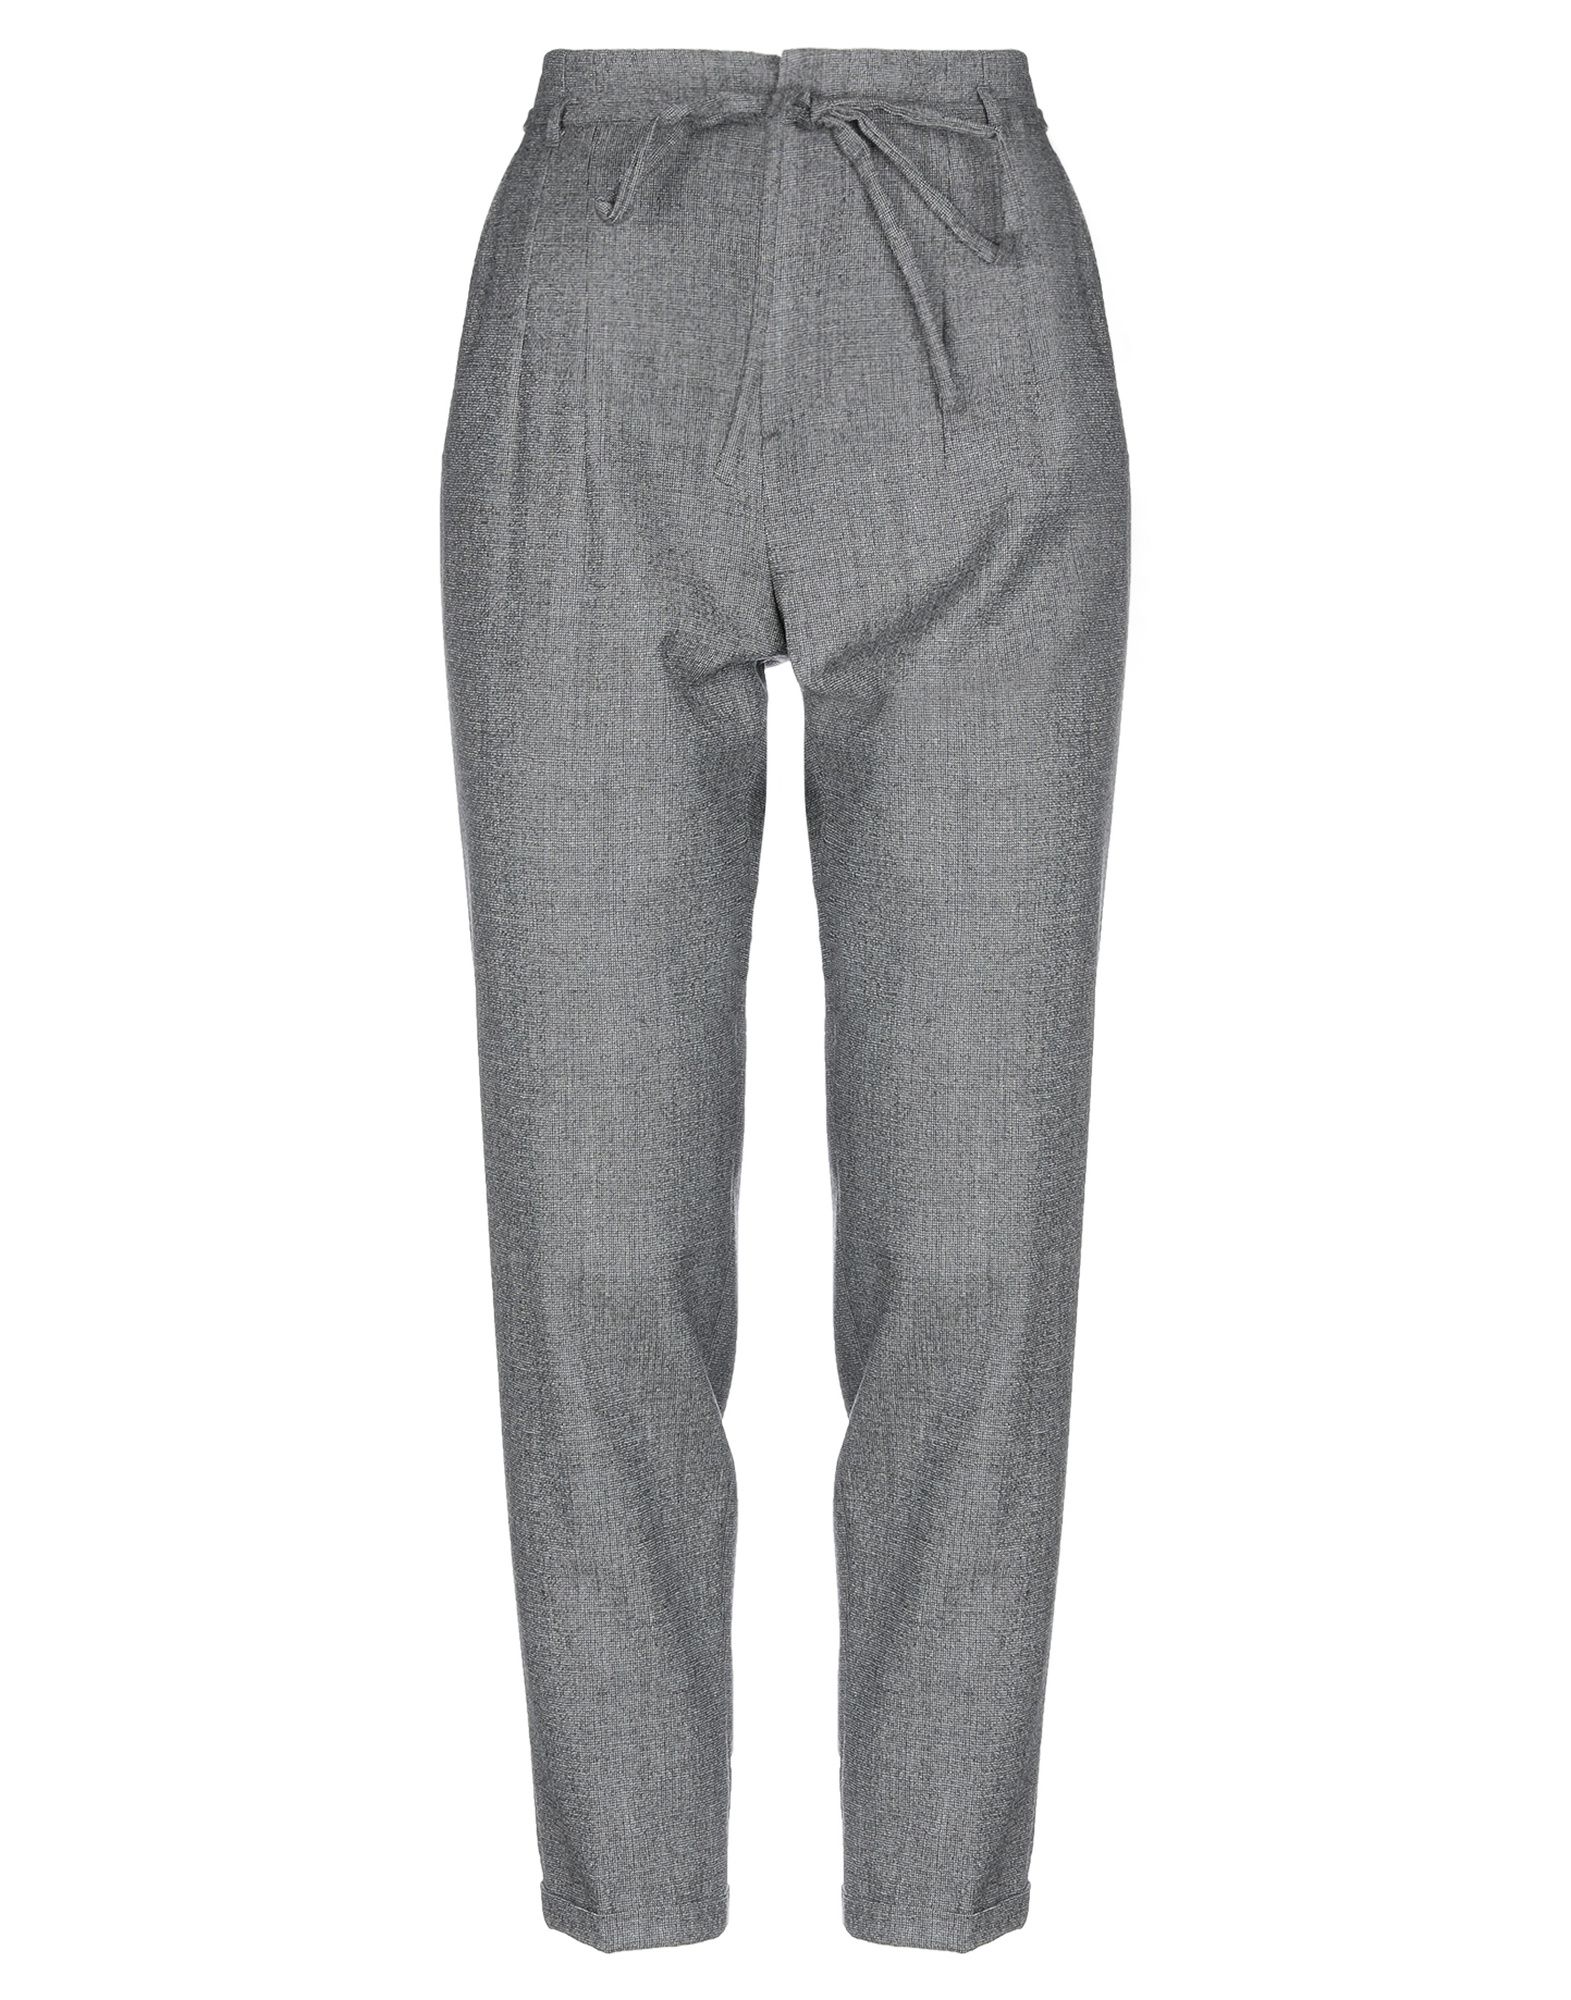 Pt0w Pants In Grey